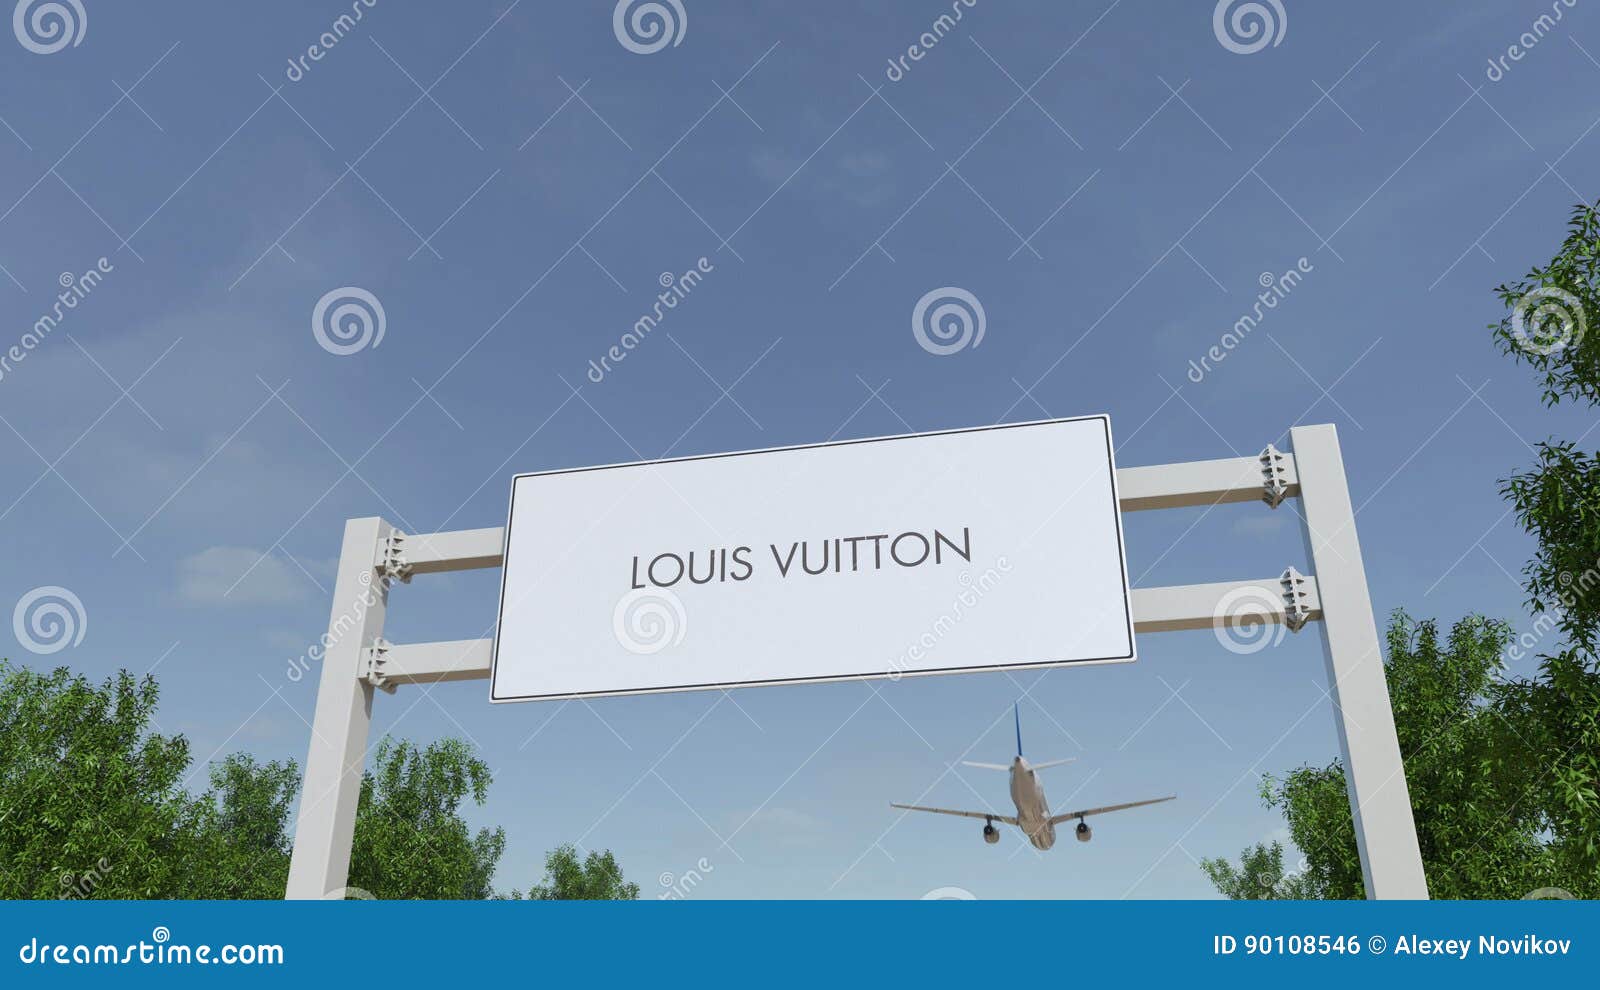 louis vuitton 3d billboard